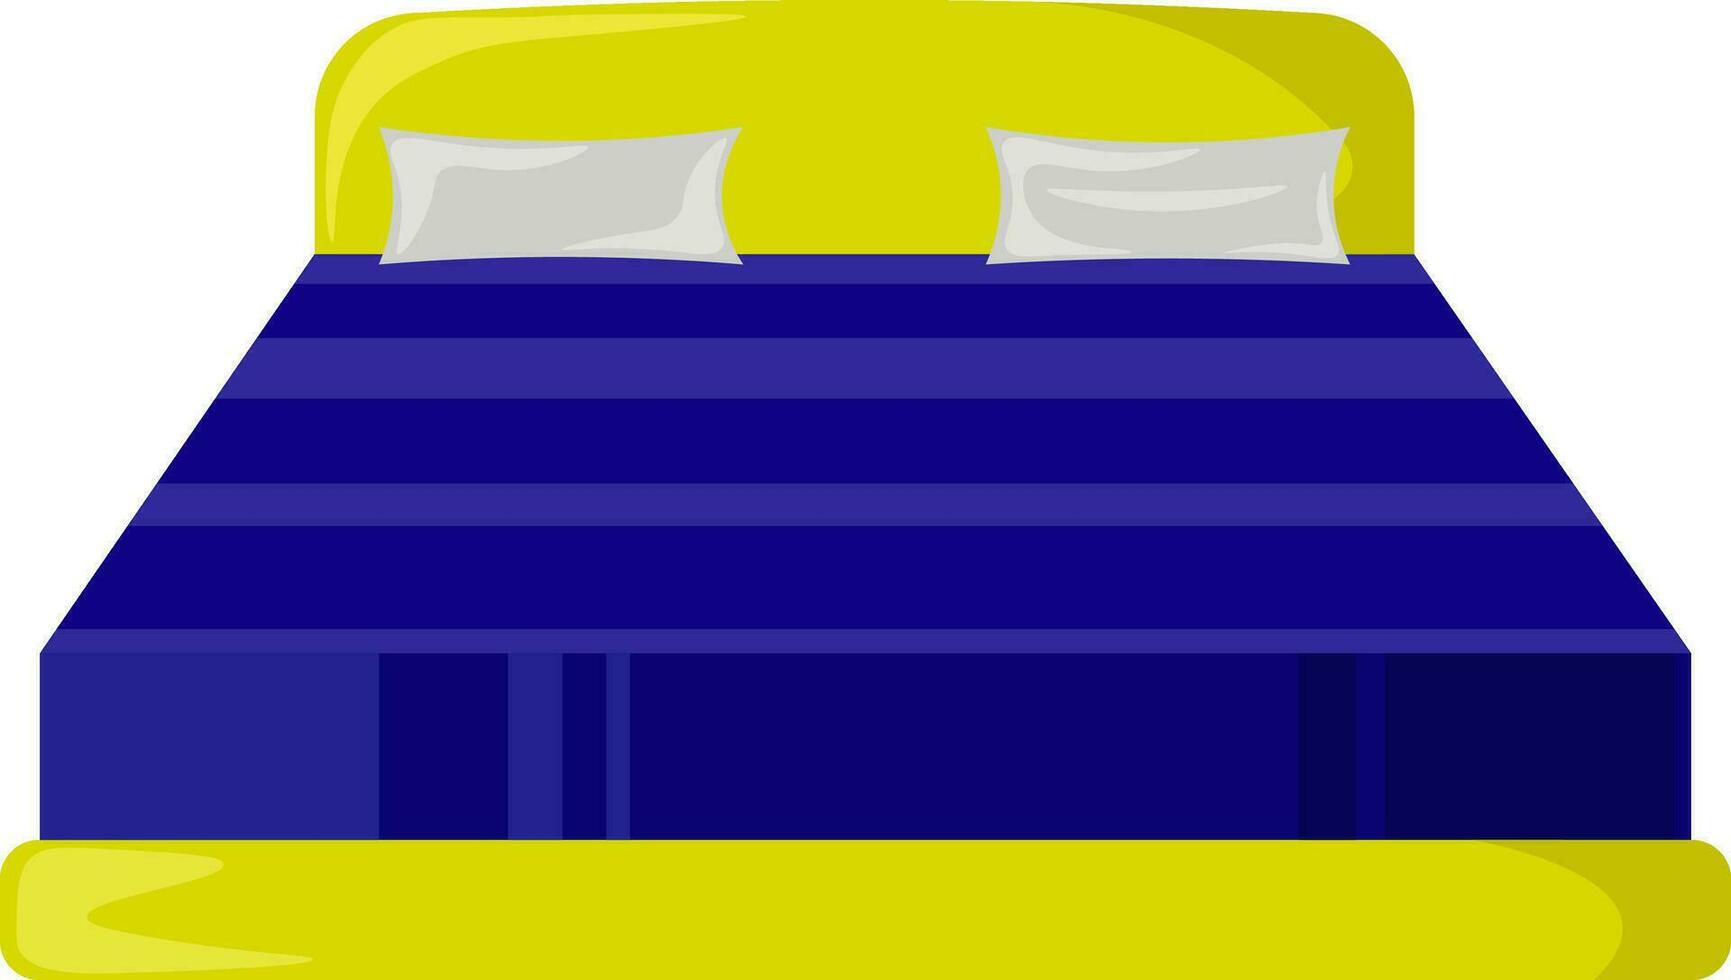 Blue big bed, illustration, vector on white background.